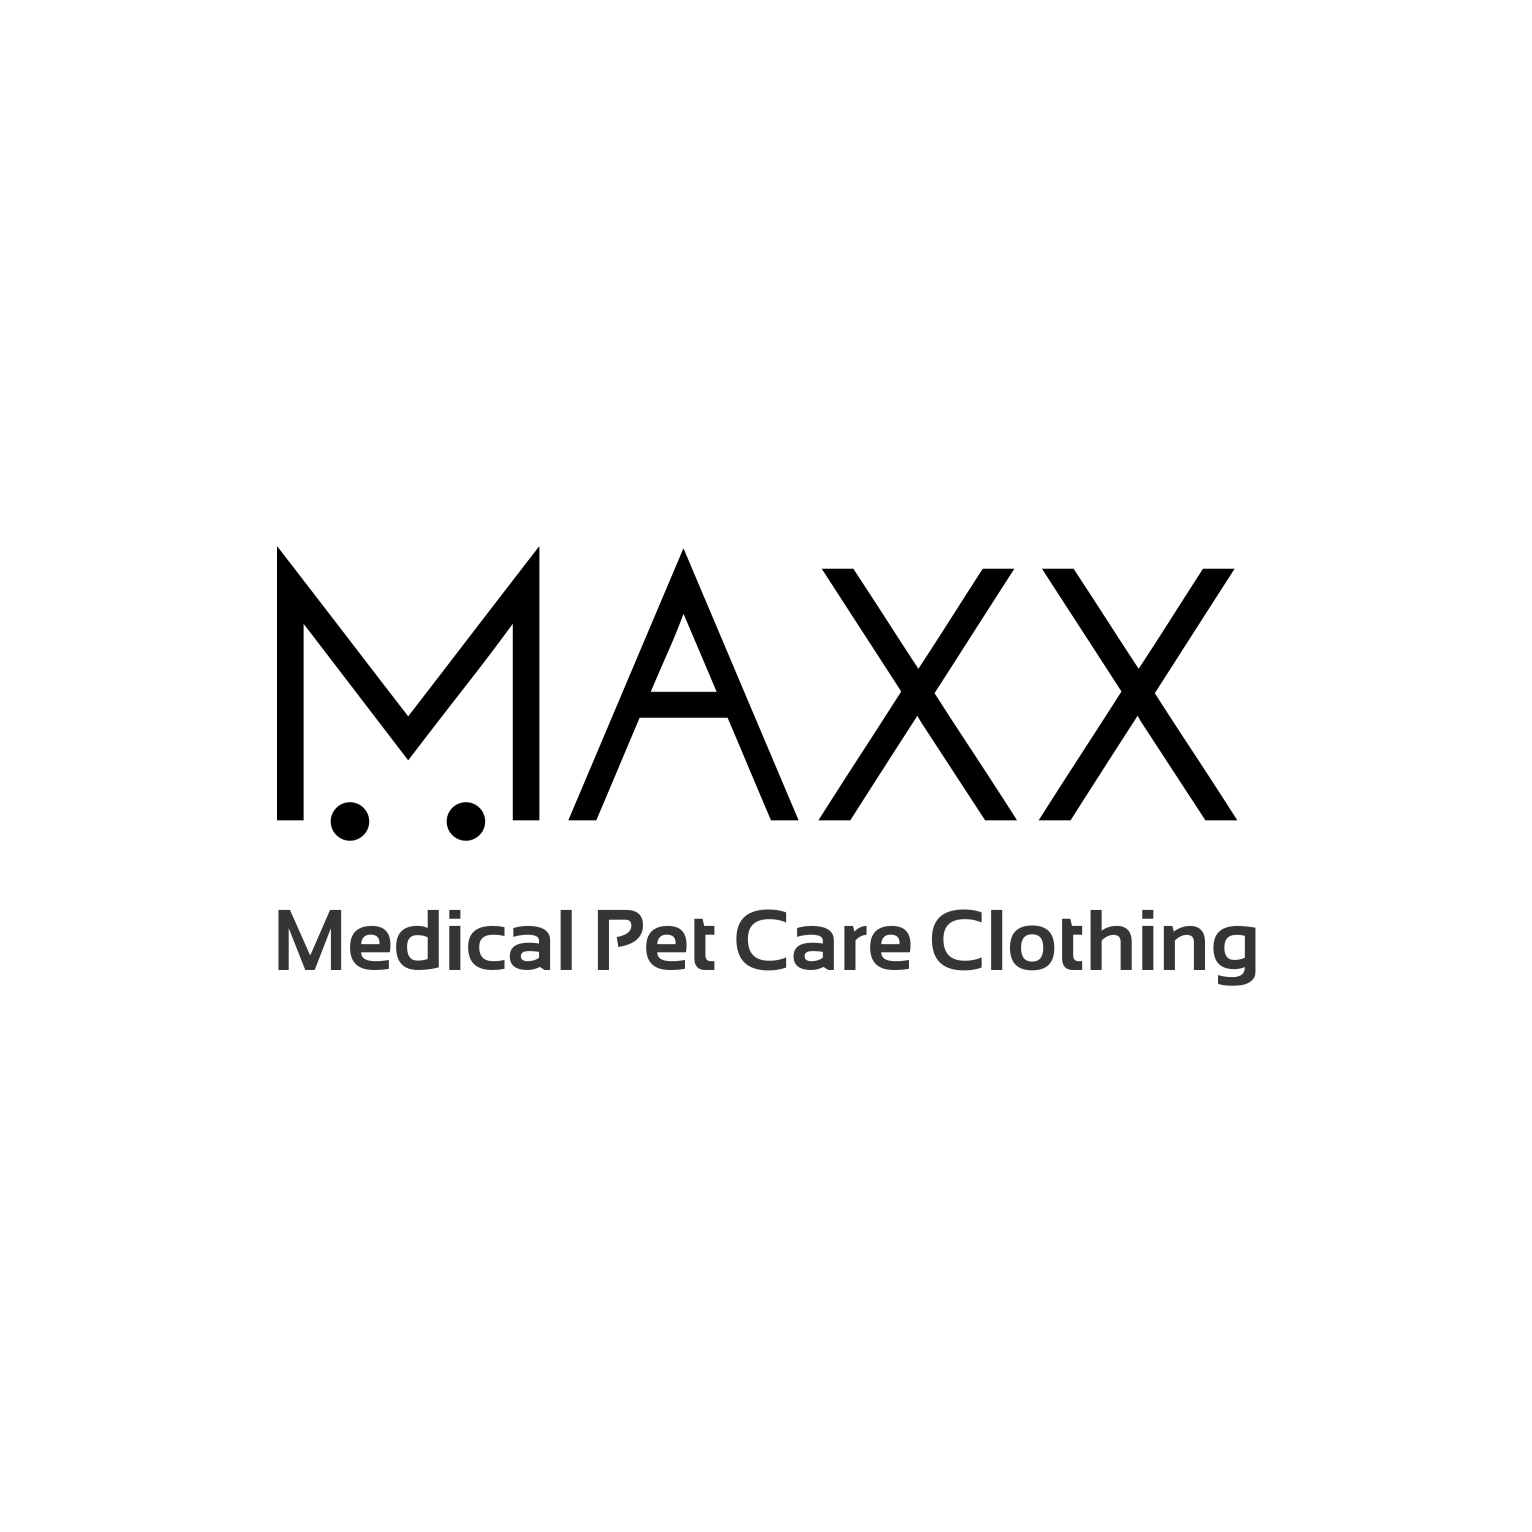 MAXX Medical Pet Clothing